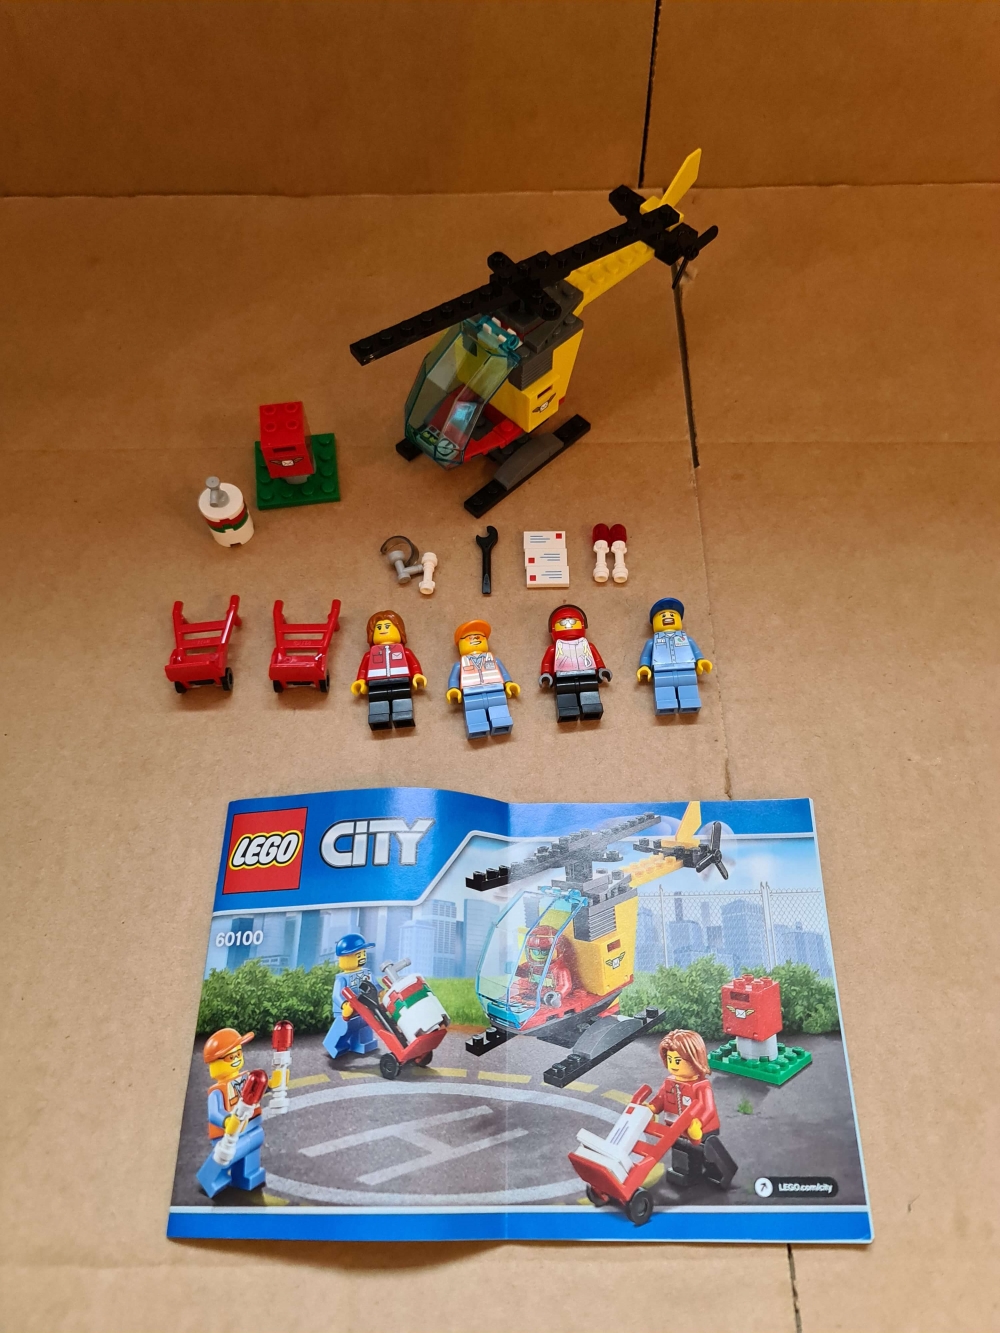 Sett 60100 fra Lego City serien.
Meget pent. Som nytt.
Komplett med manual.